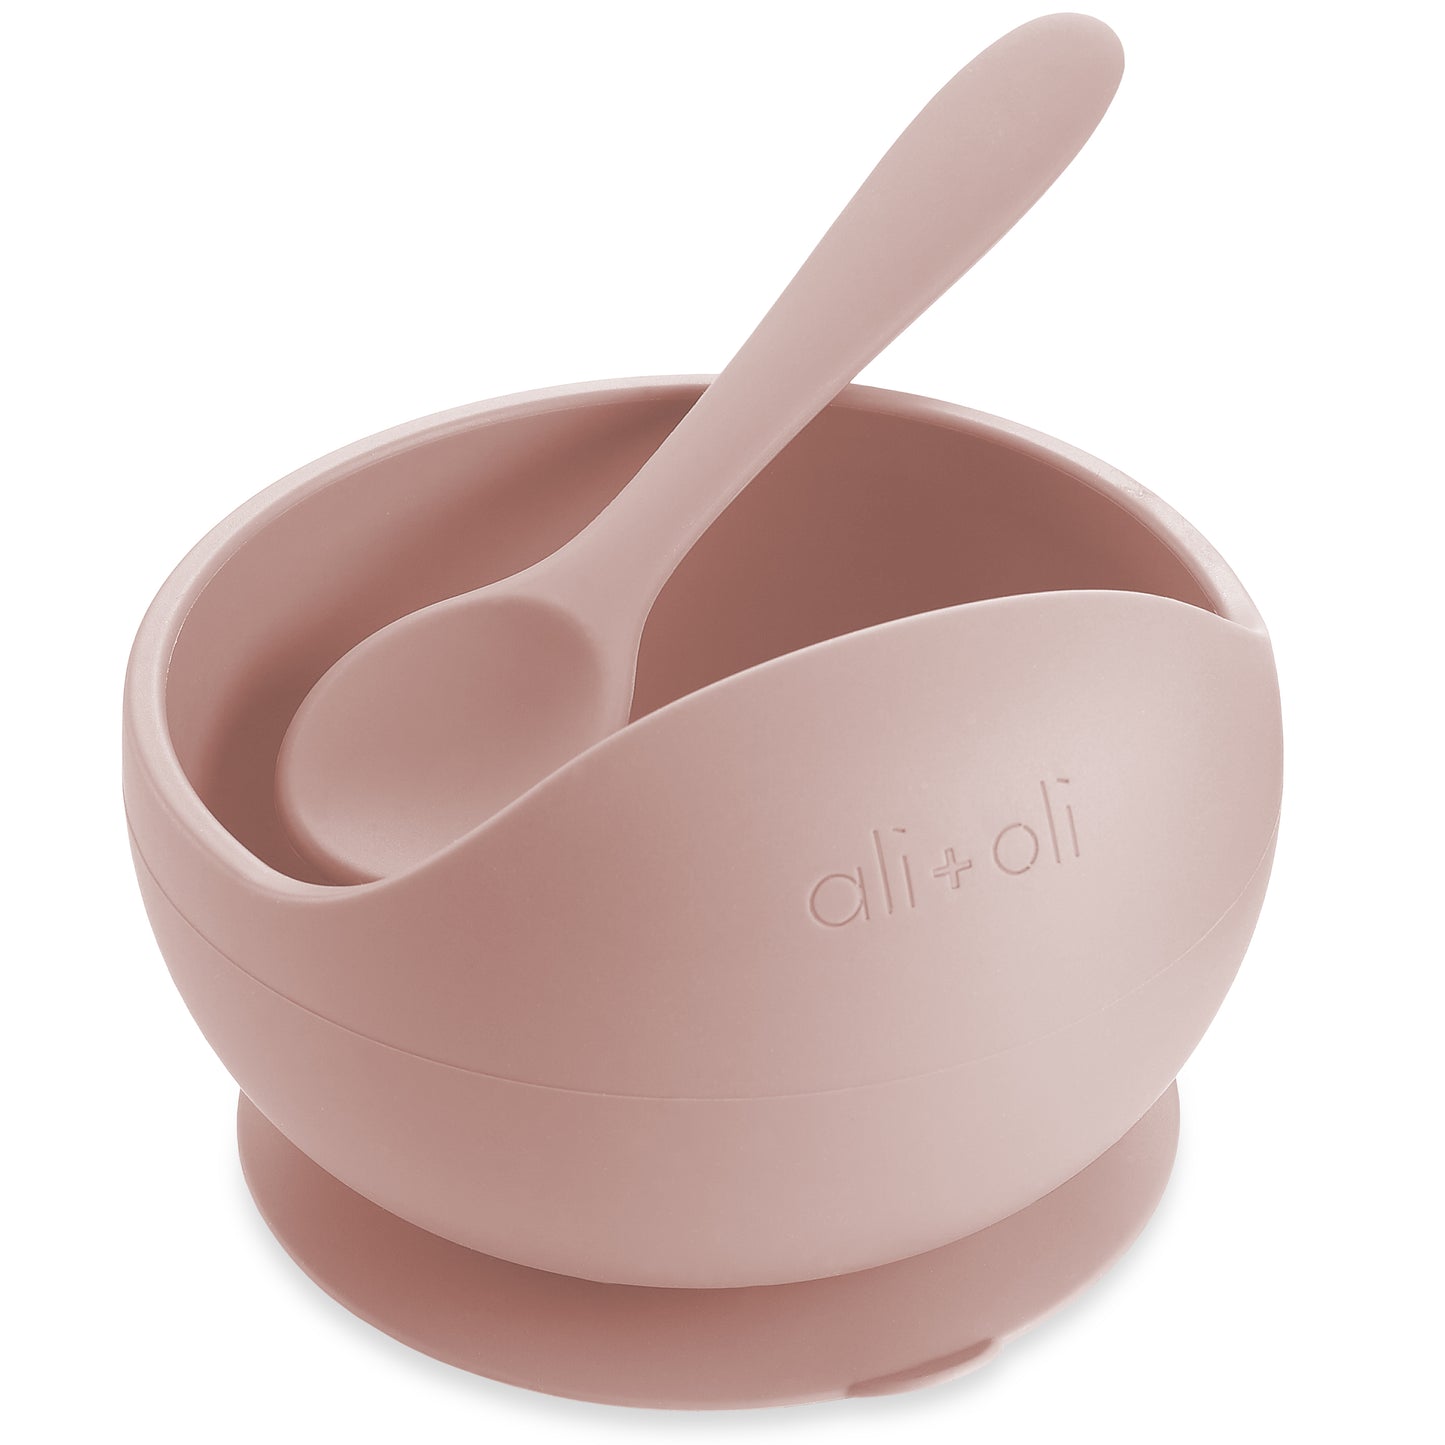 Ali+Oli Suction Bowl & Spoon Set (Blush)